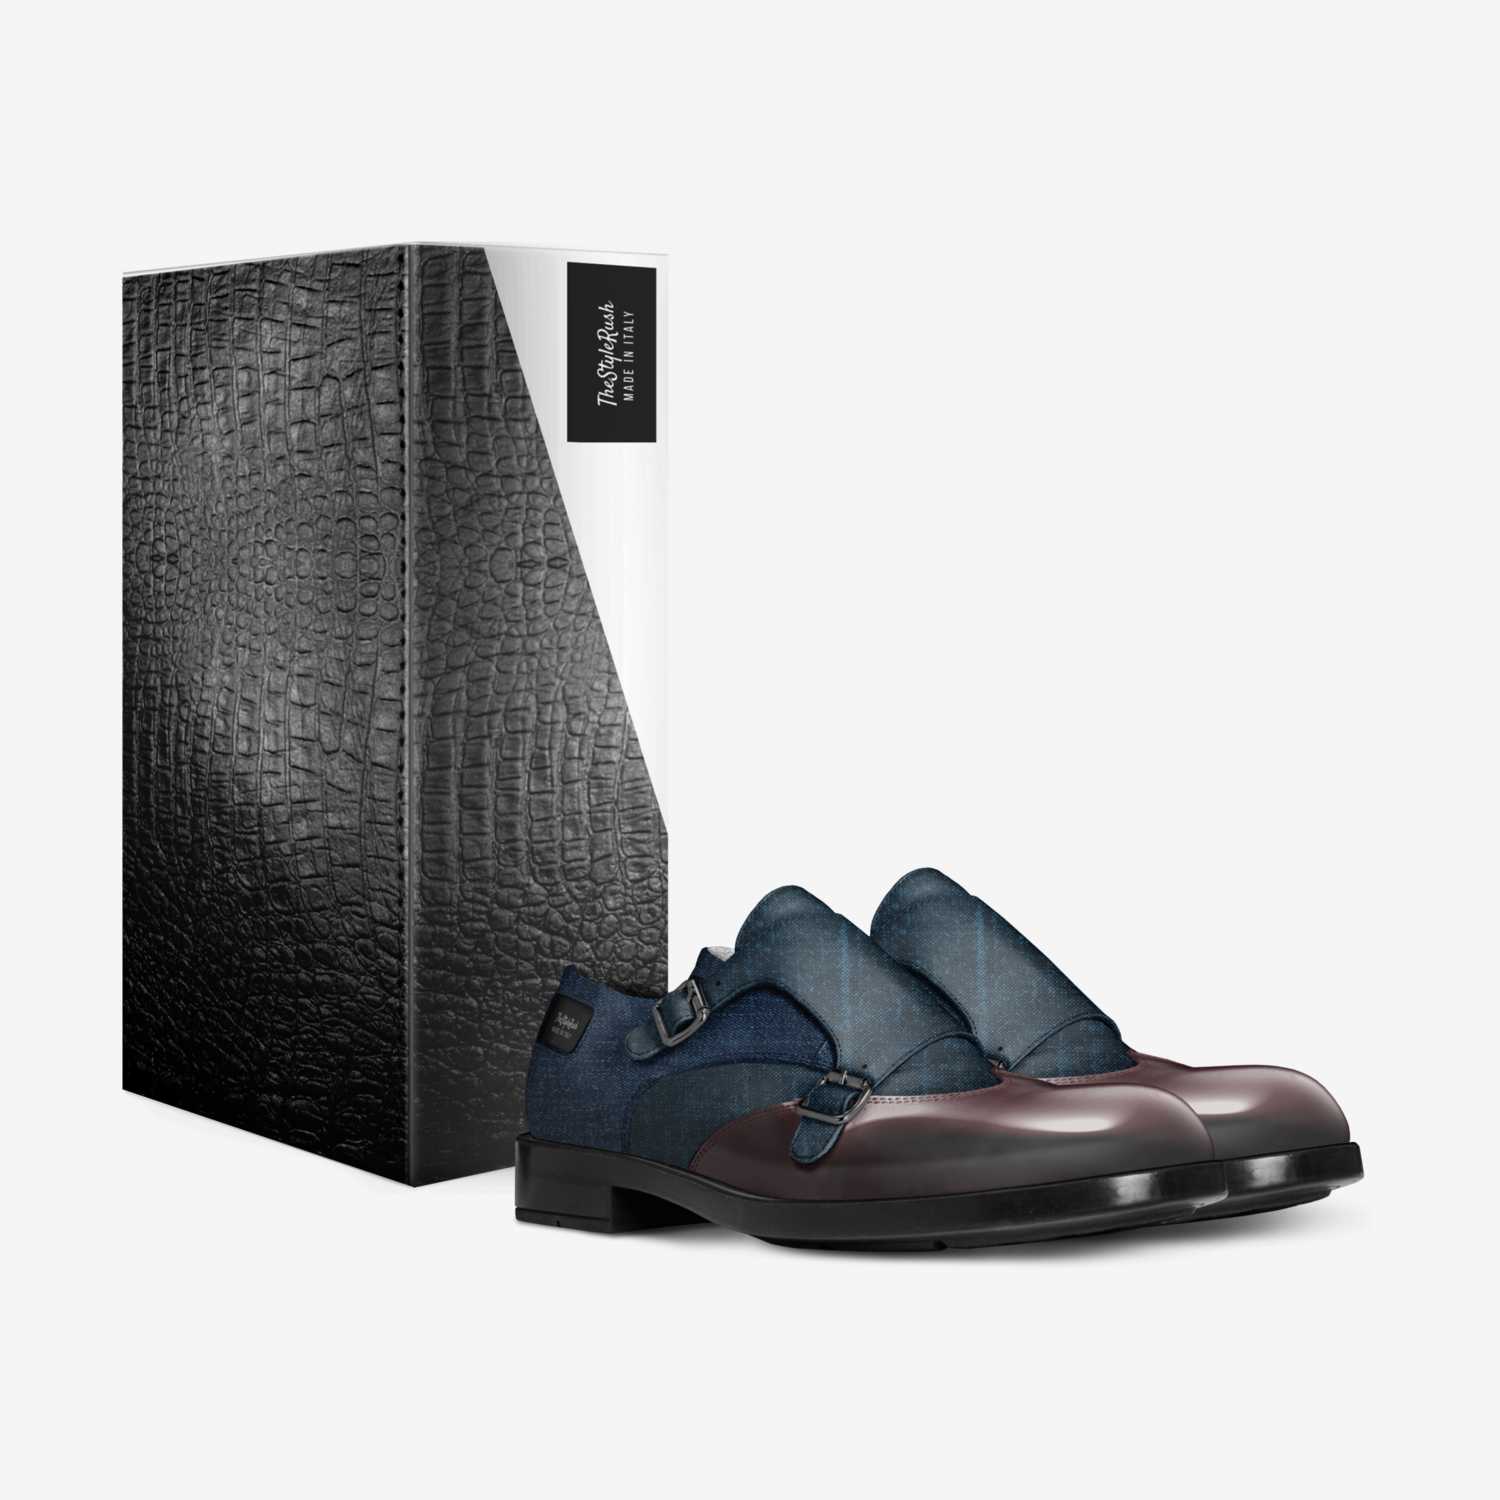 Porosus custom made in Italy shoes by John Koly | Box view